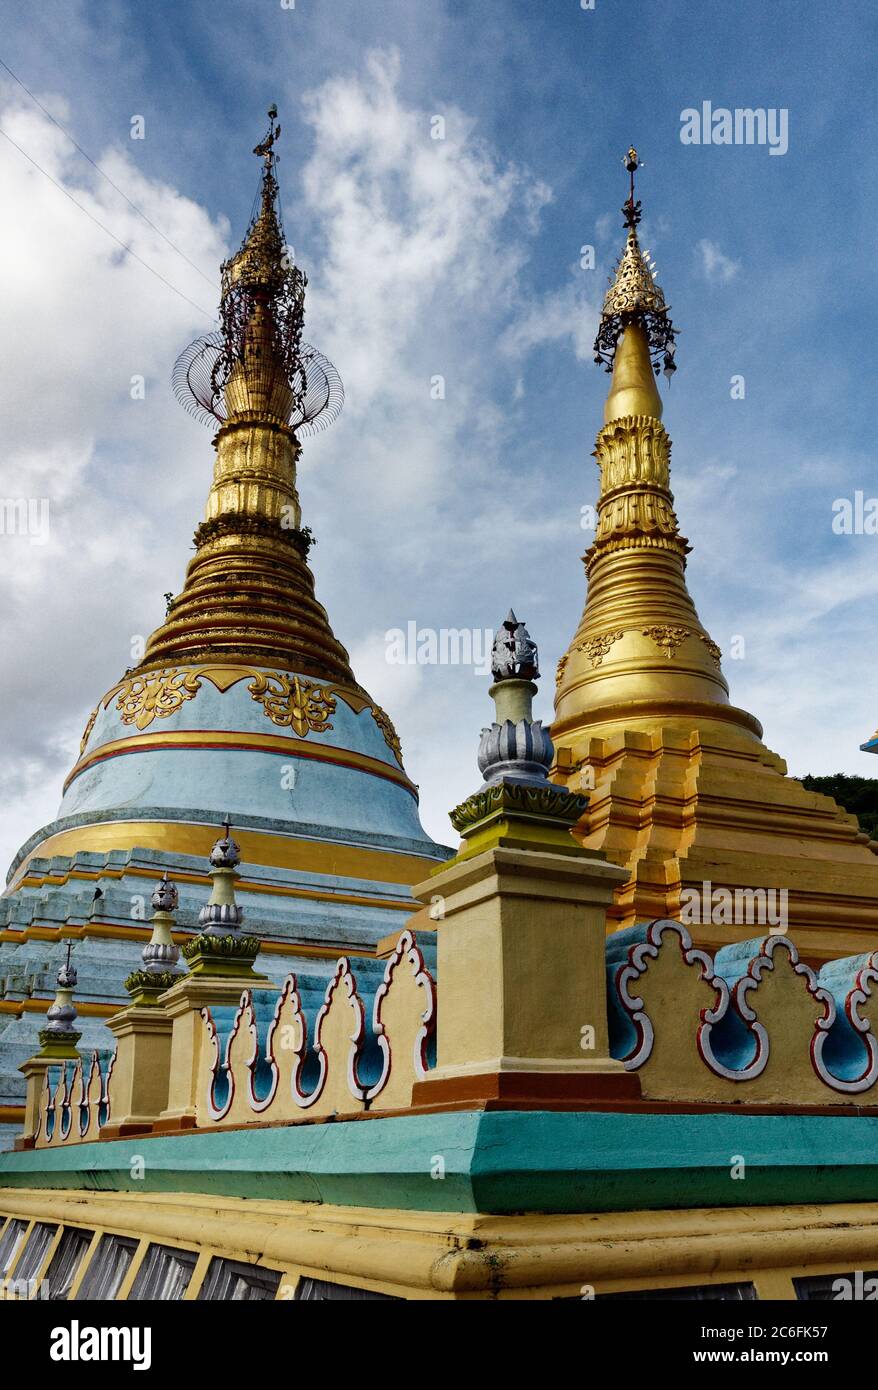 Ornate gold and decorated stupas at the Shwe Sayan Pagoda, Dala, Yangon, Myanmar Stock Photo